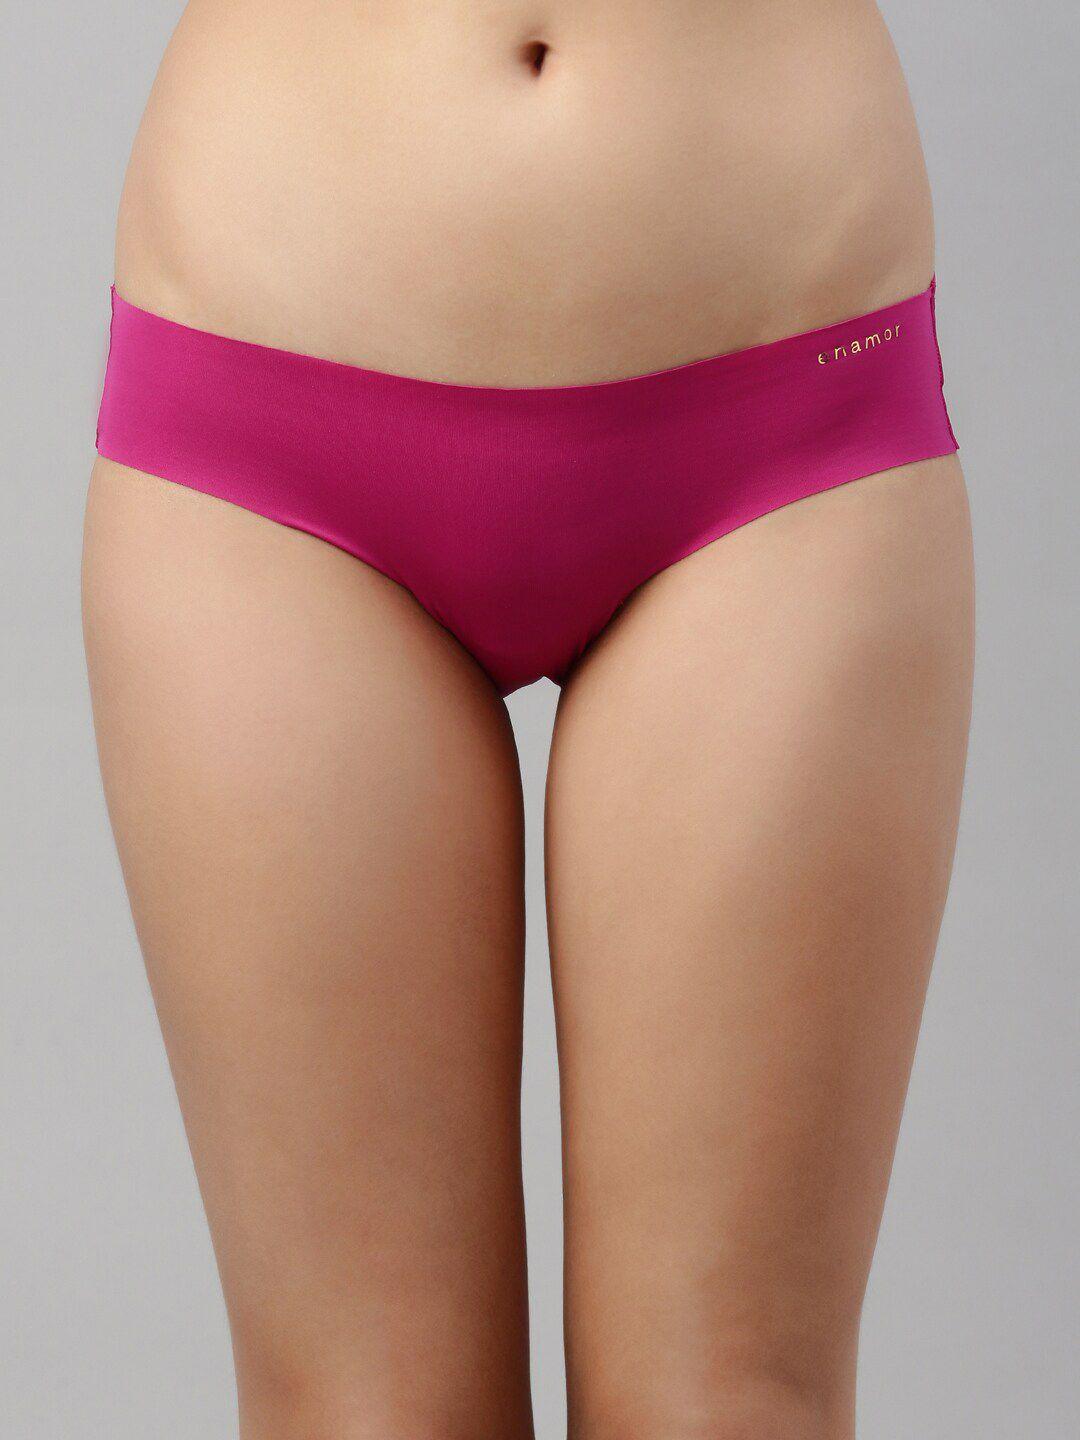 enamor women pink solid bikini briefs